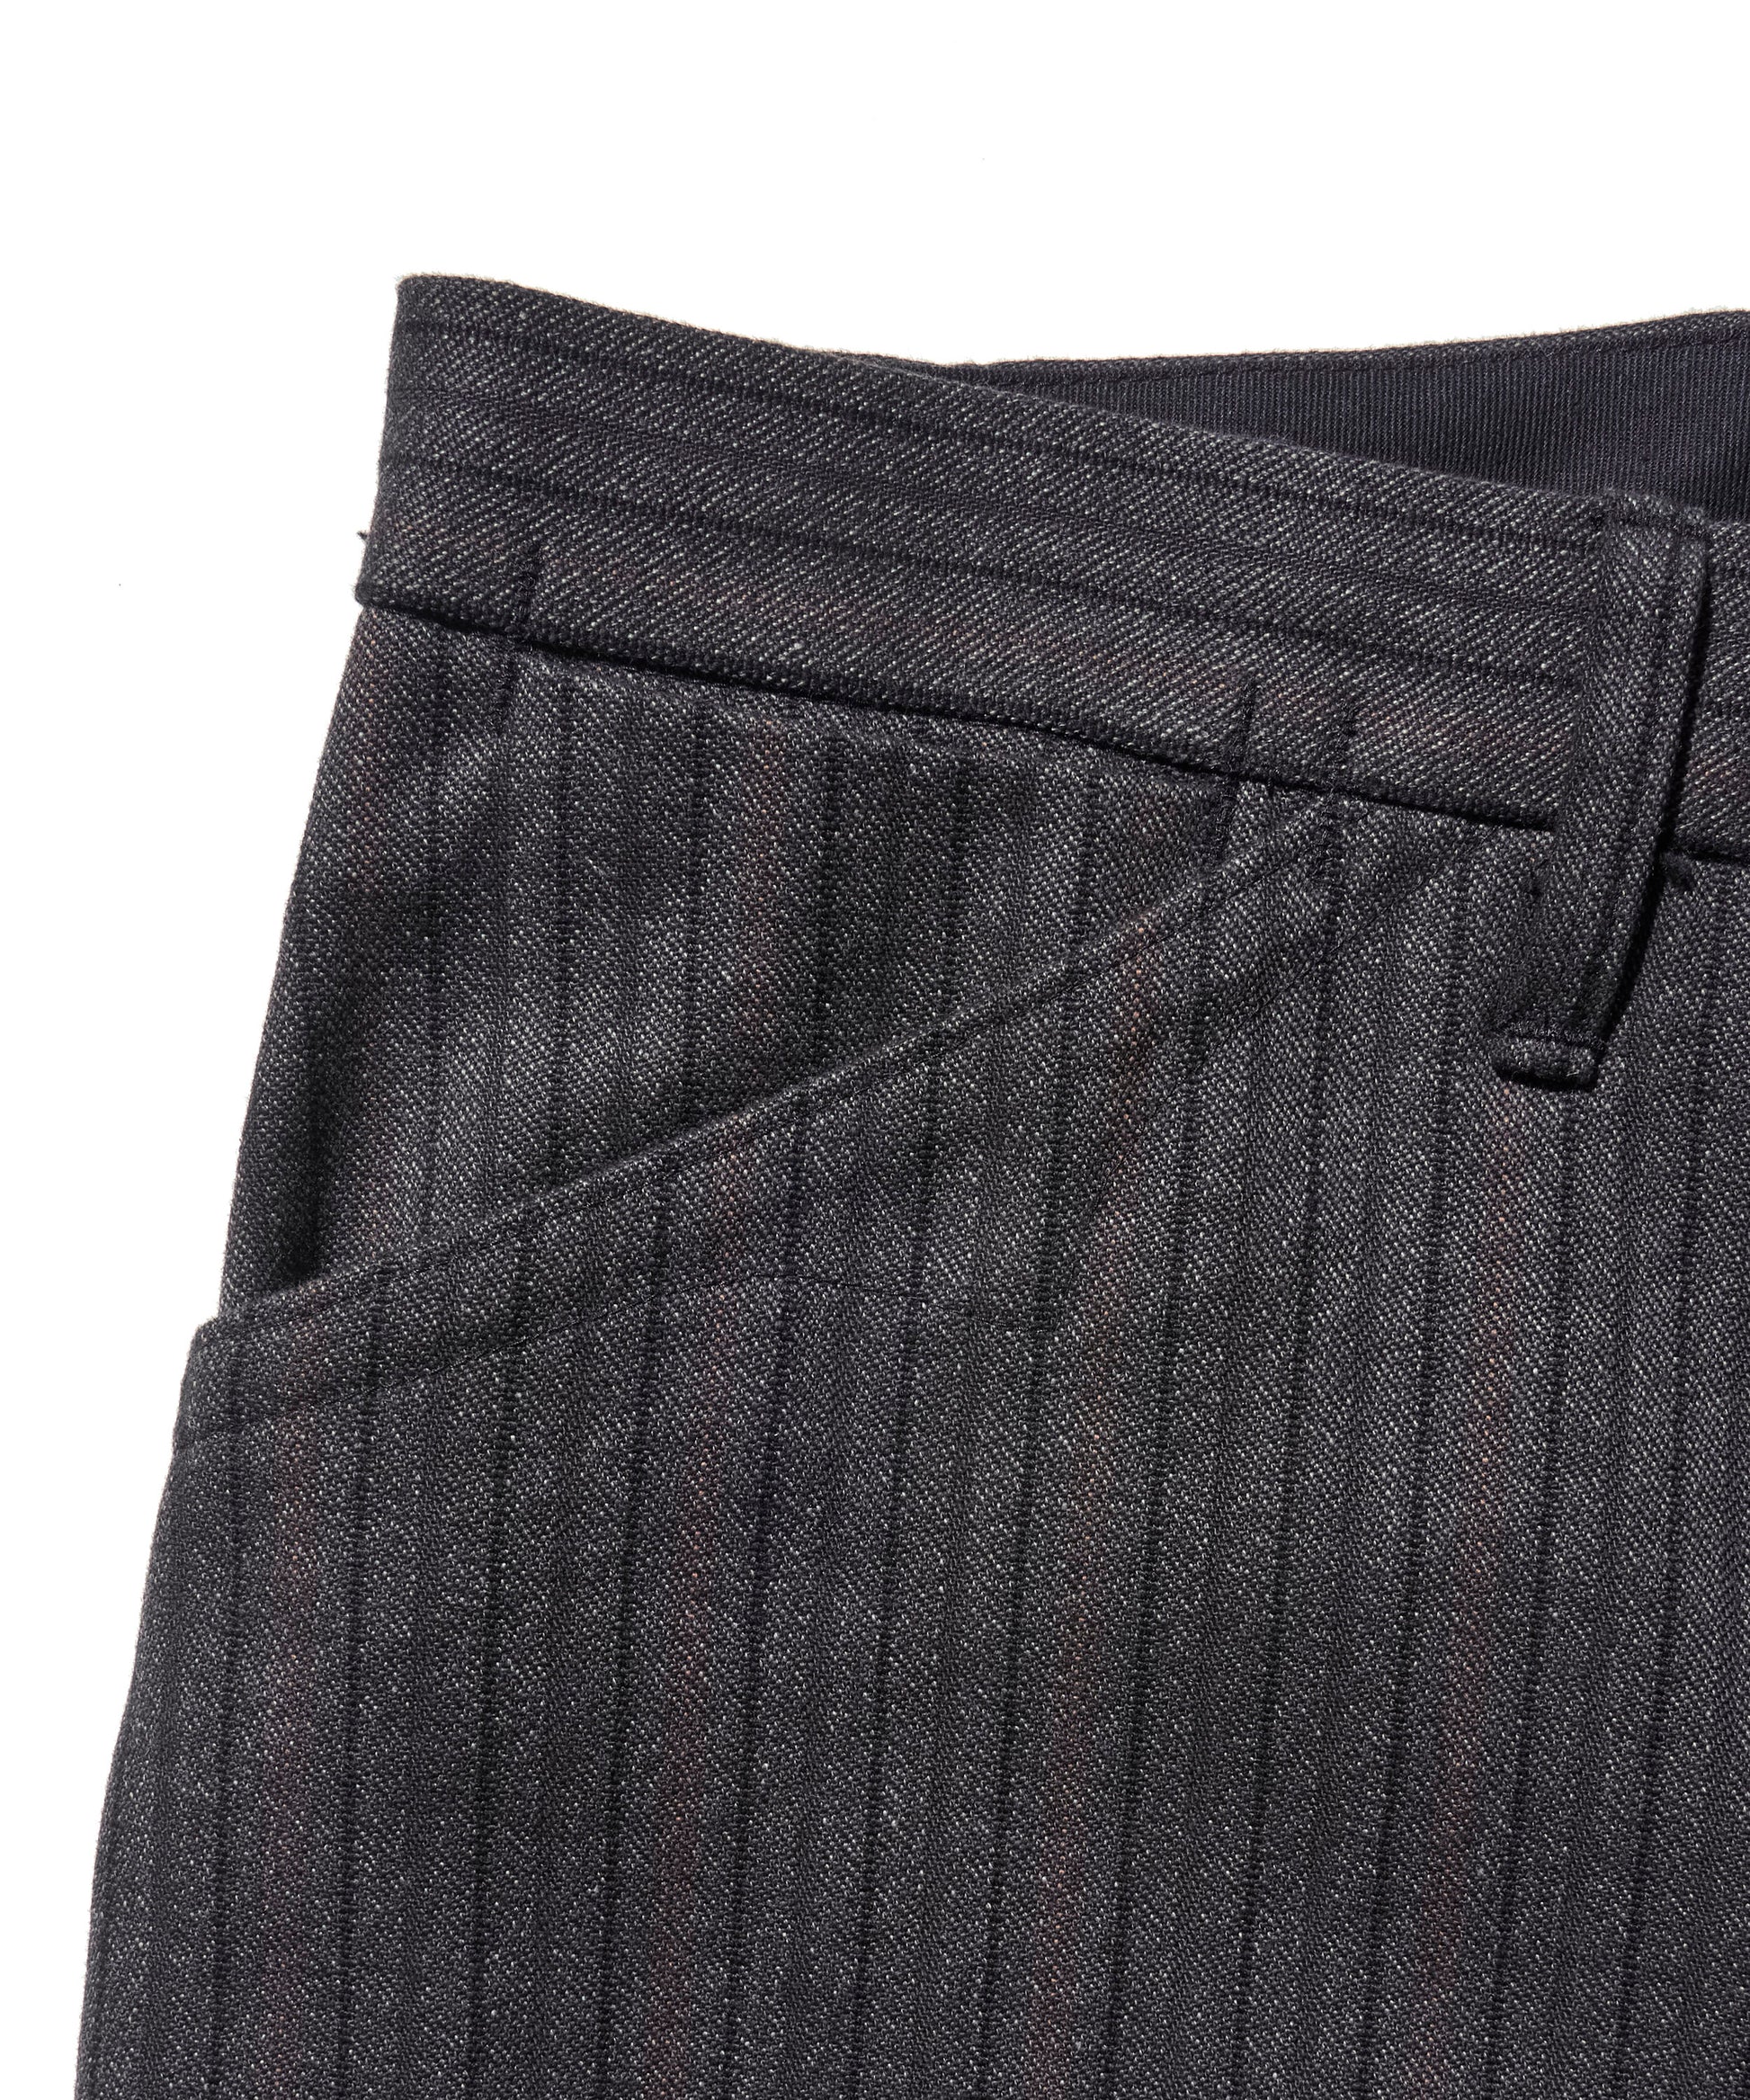 Buy Urban Ranger By Pantaloons Men Brown Slim Fit Solid Corduroy Regular  Trousers - Trousers for Men 7669080 | Myntra